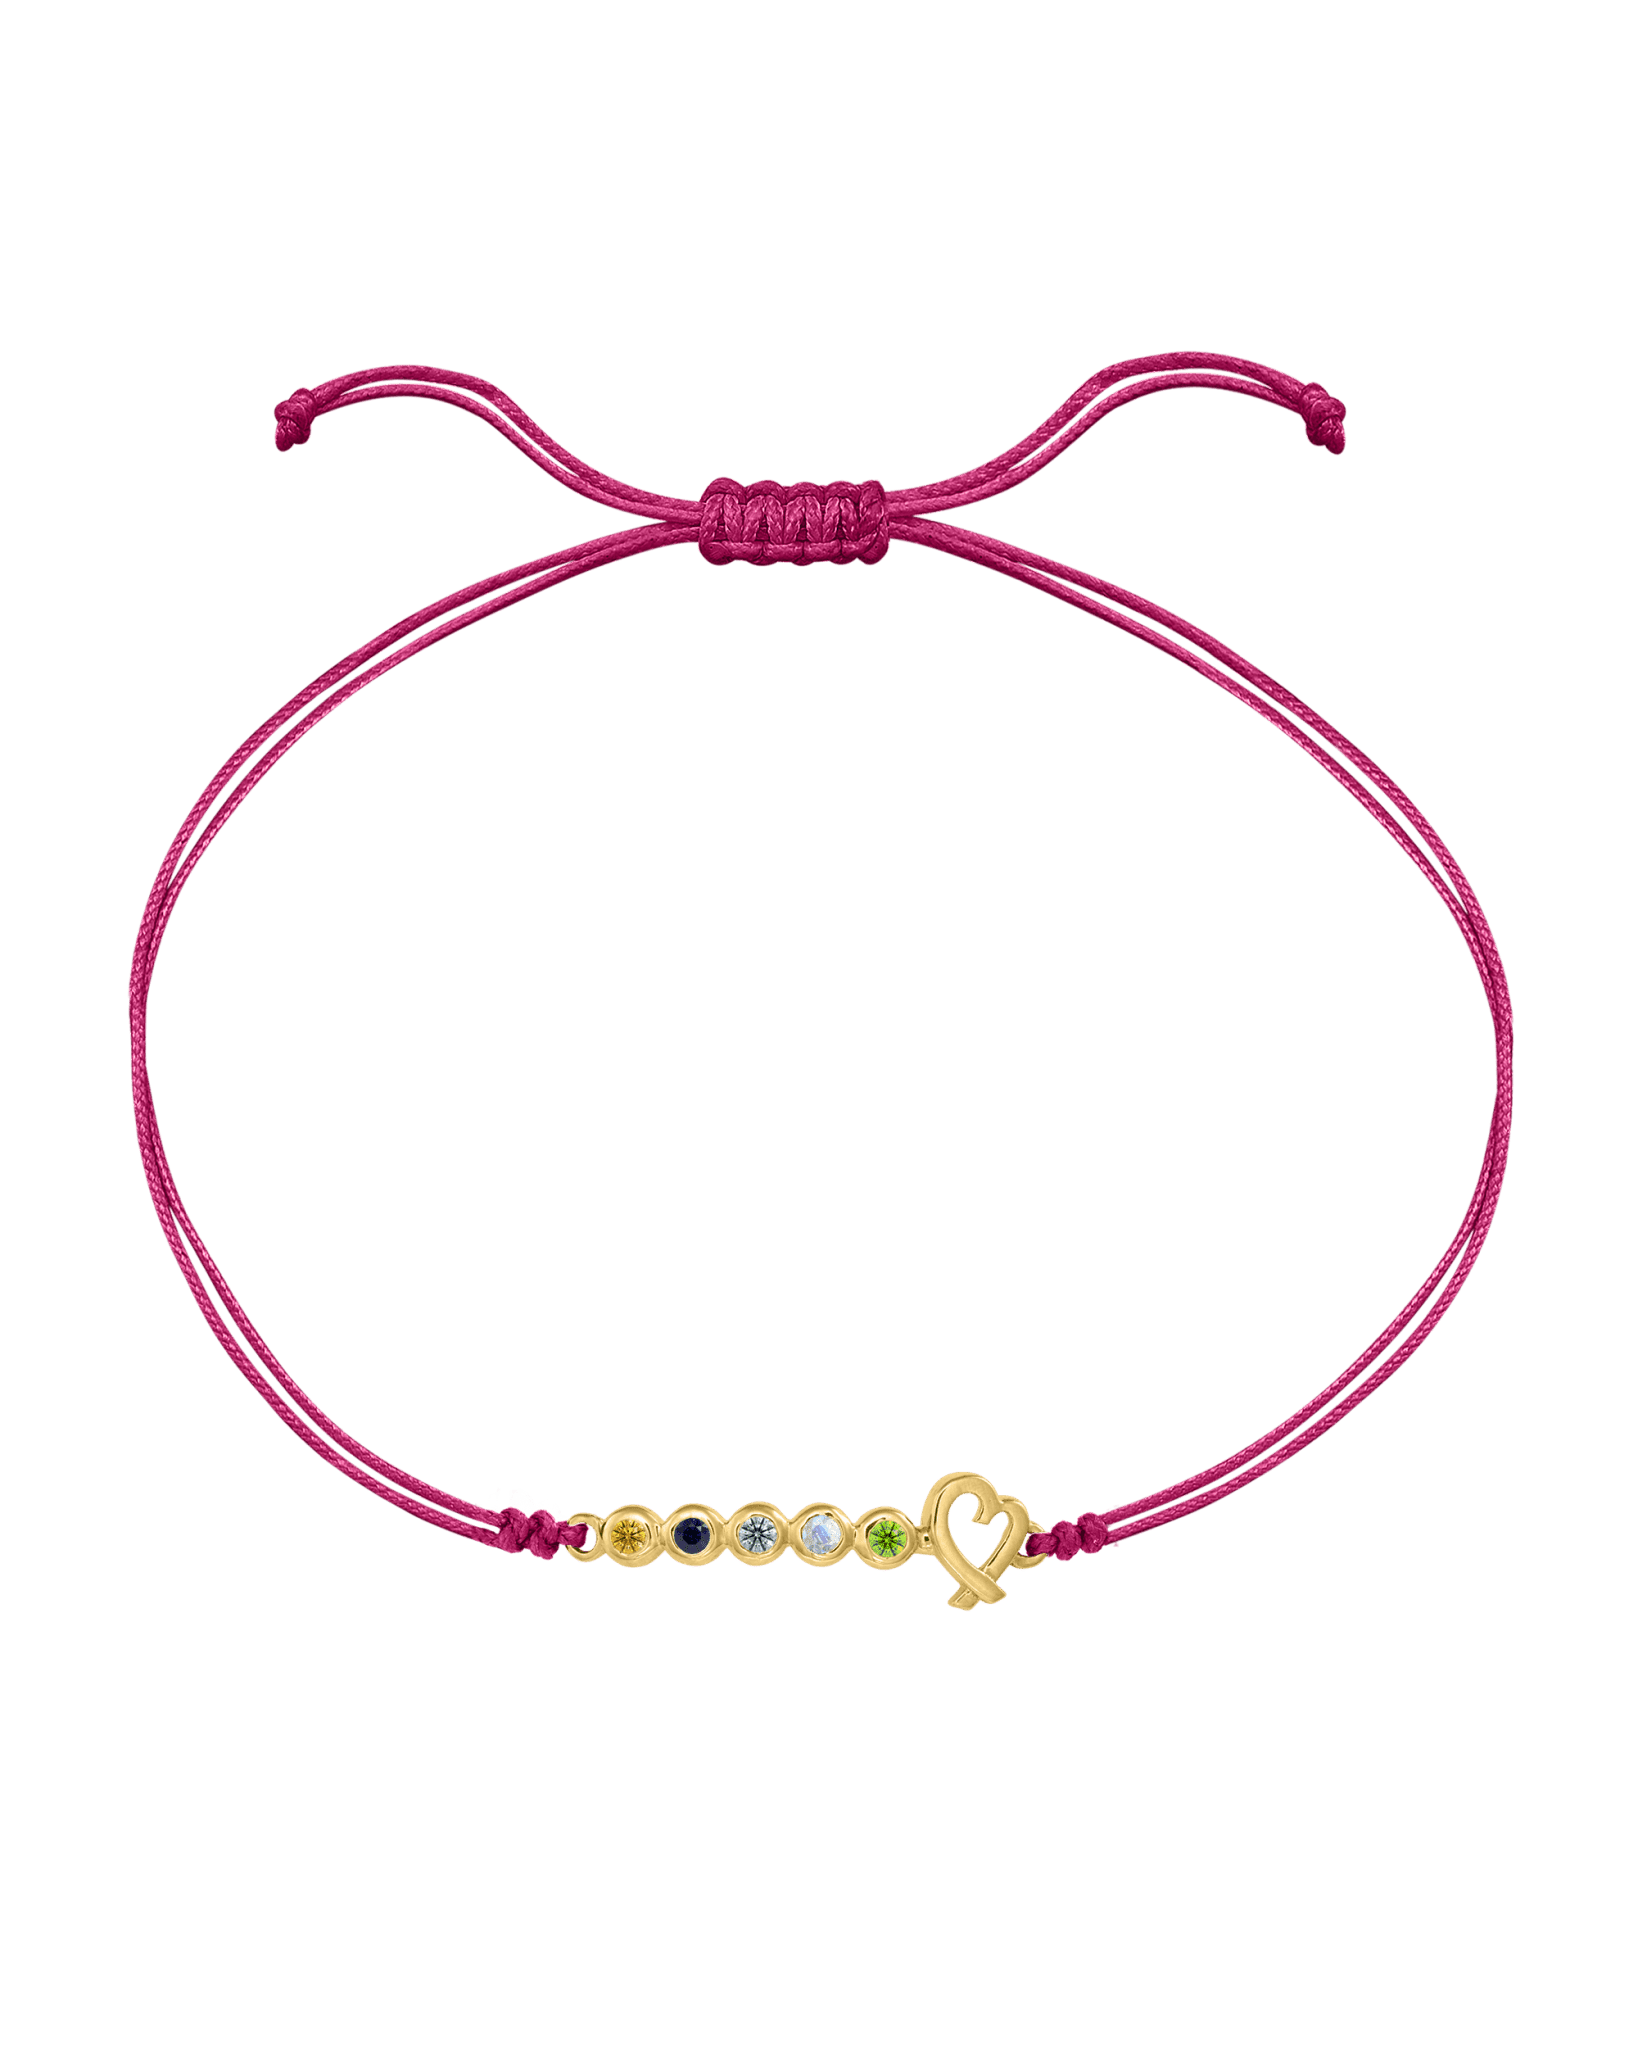 Birthstone Bar Heart Bracelet - 14K Yellow Gold Bracelets 14K Solid Gold Pink 2 